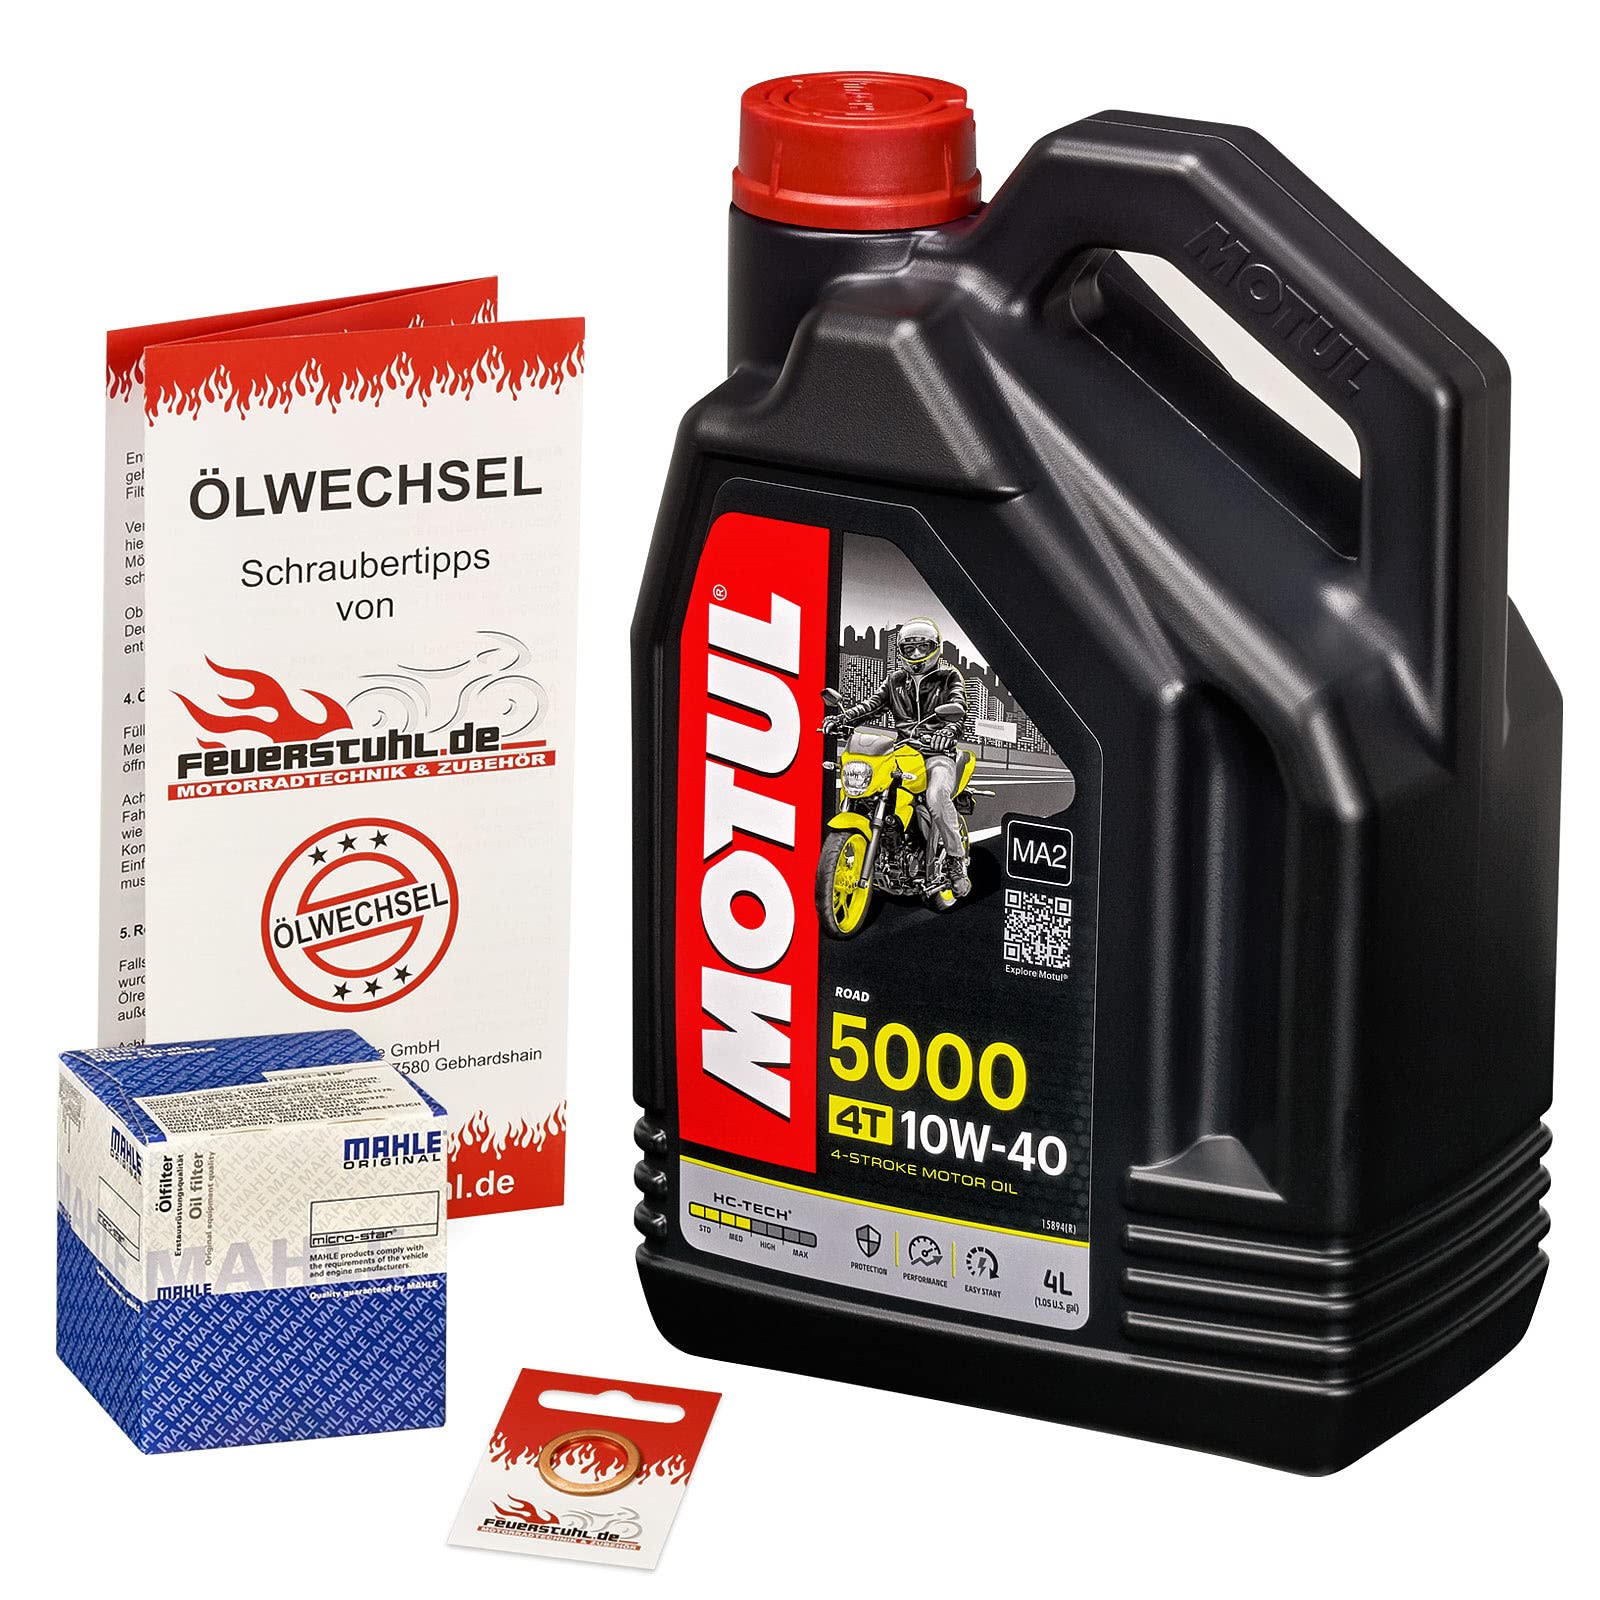 Motul 10W-40 Öl + Mahle Ölfilter für Triumph Daytona 675 /R, 06-12, D67LC H67 - Ölwechselset inkl. Motoröl, Filter, Dichtring von Feuerstuhl.de GmbH